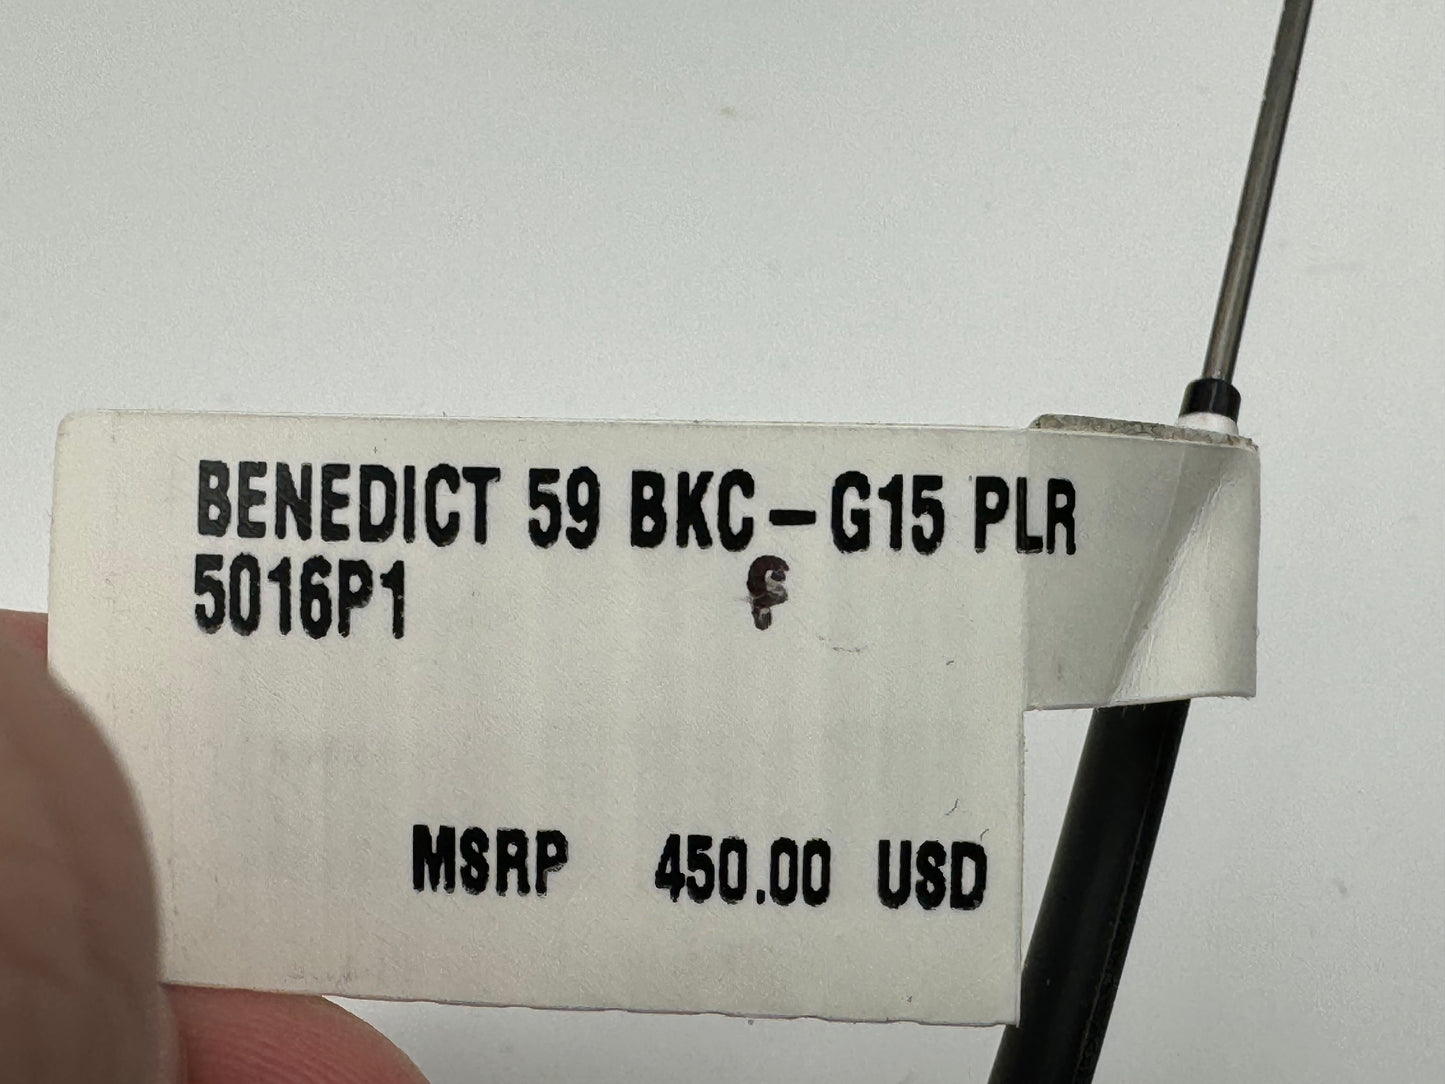 Oliver Peoples Benedict 59mm OV 1002 5016 / P1 Black / G 15 VFX Polarized NEW missing original case and box